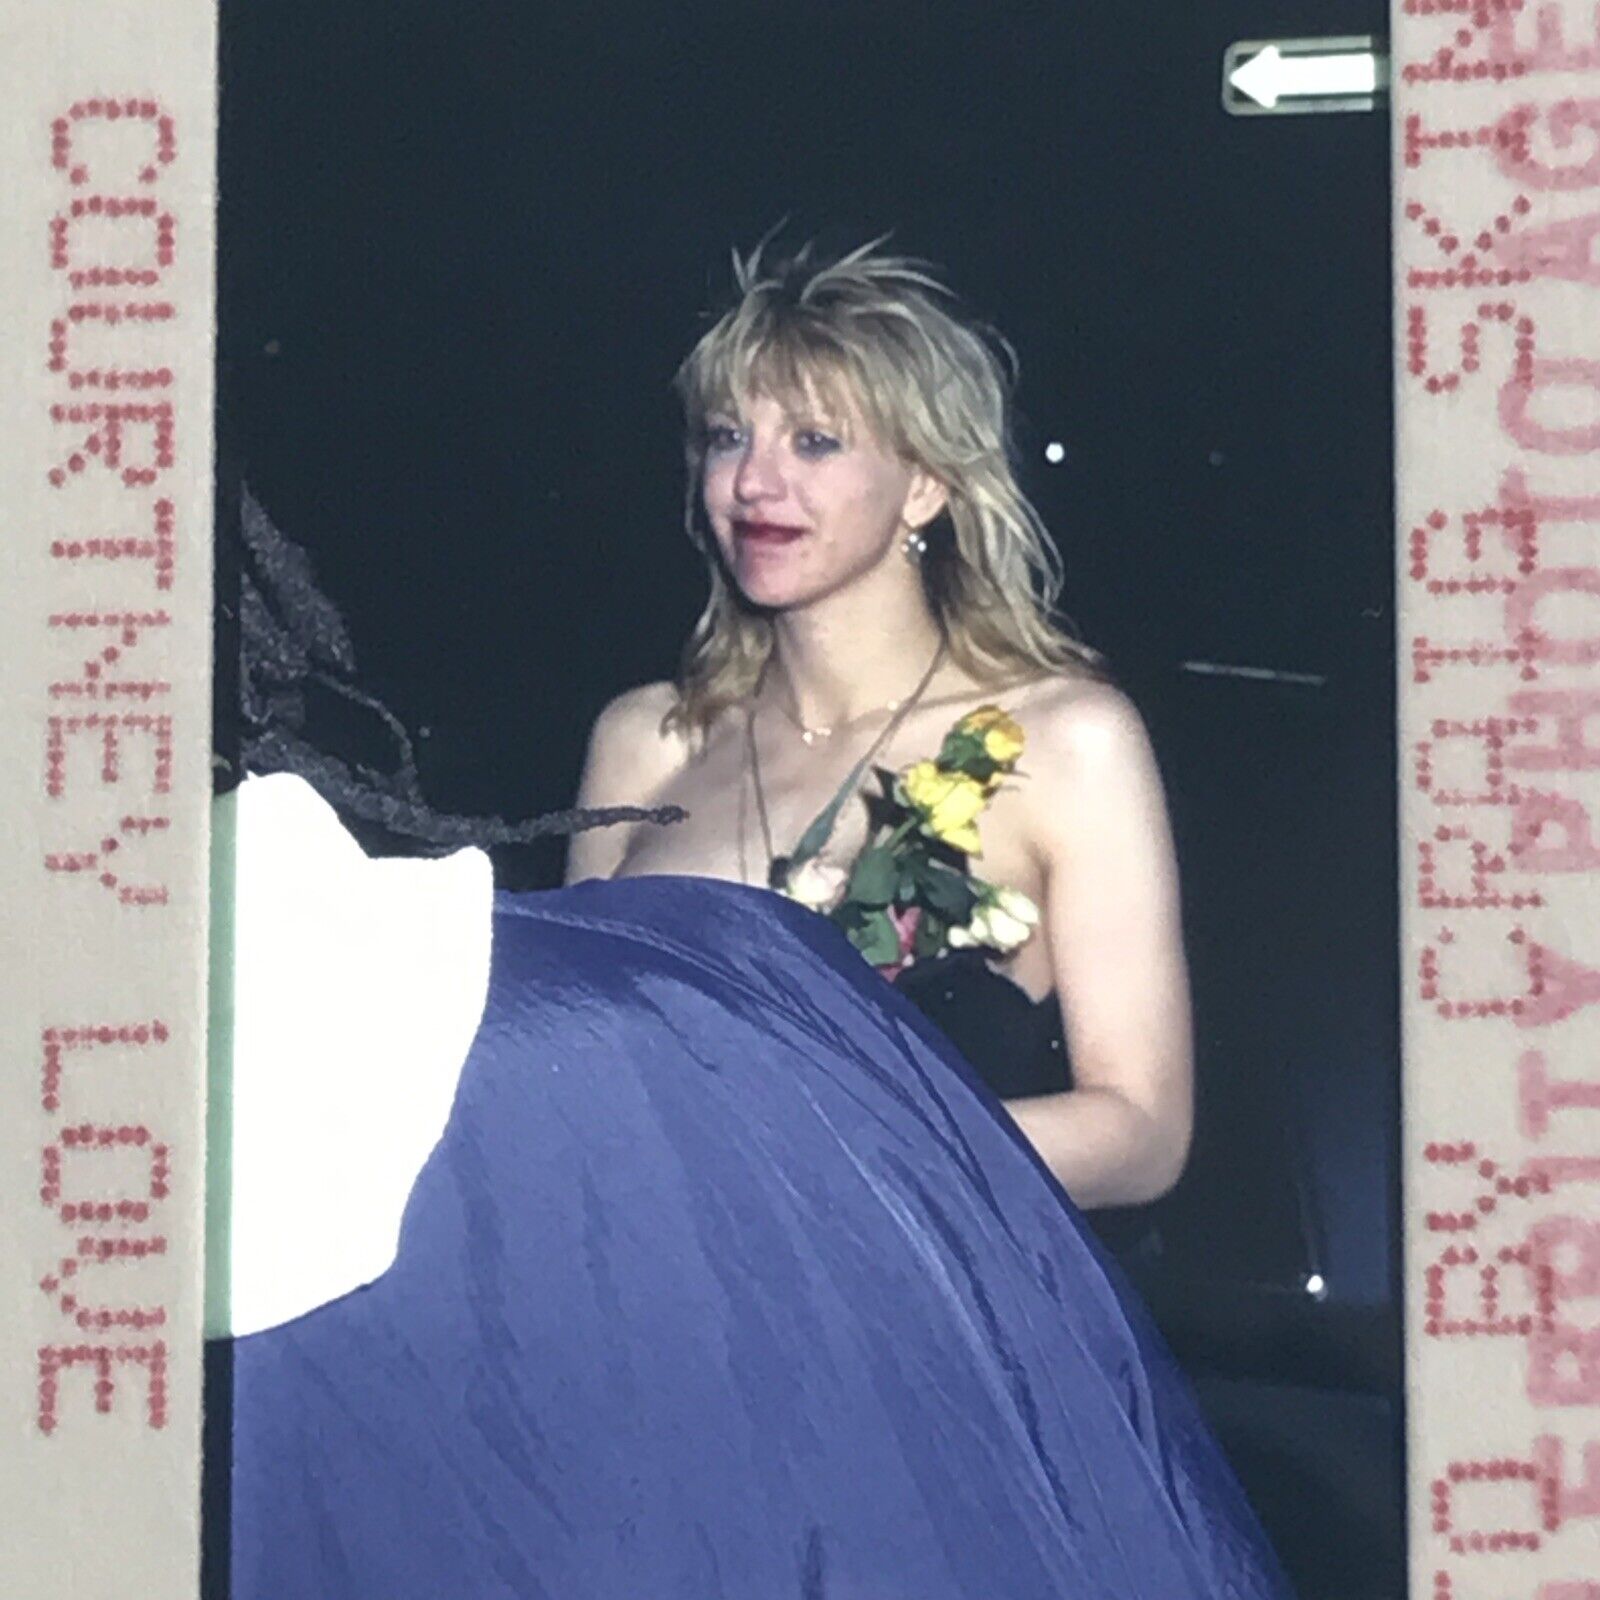 1995 Courtney Love Lifebeat Party Photo Transparency Slide Nirvana Kurt Cobain